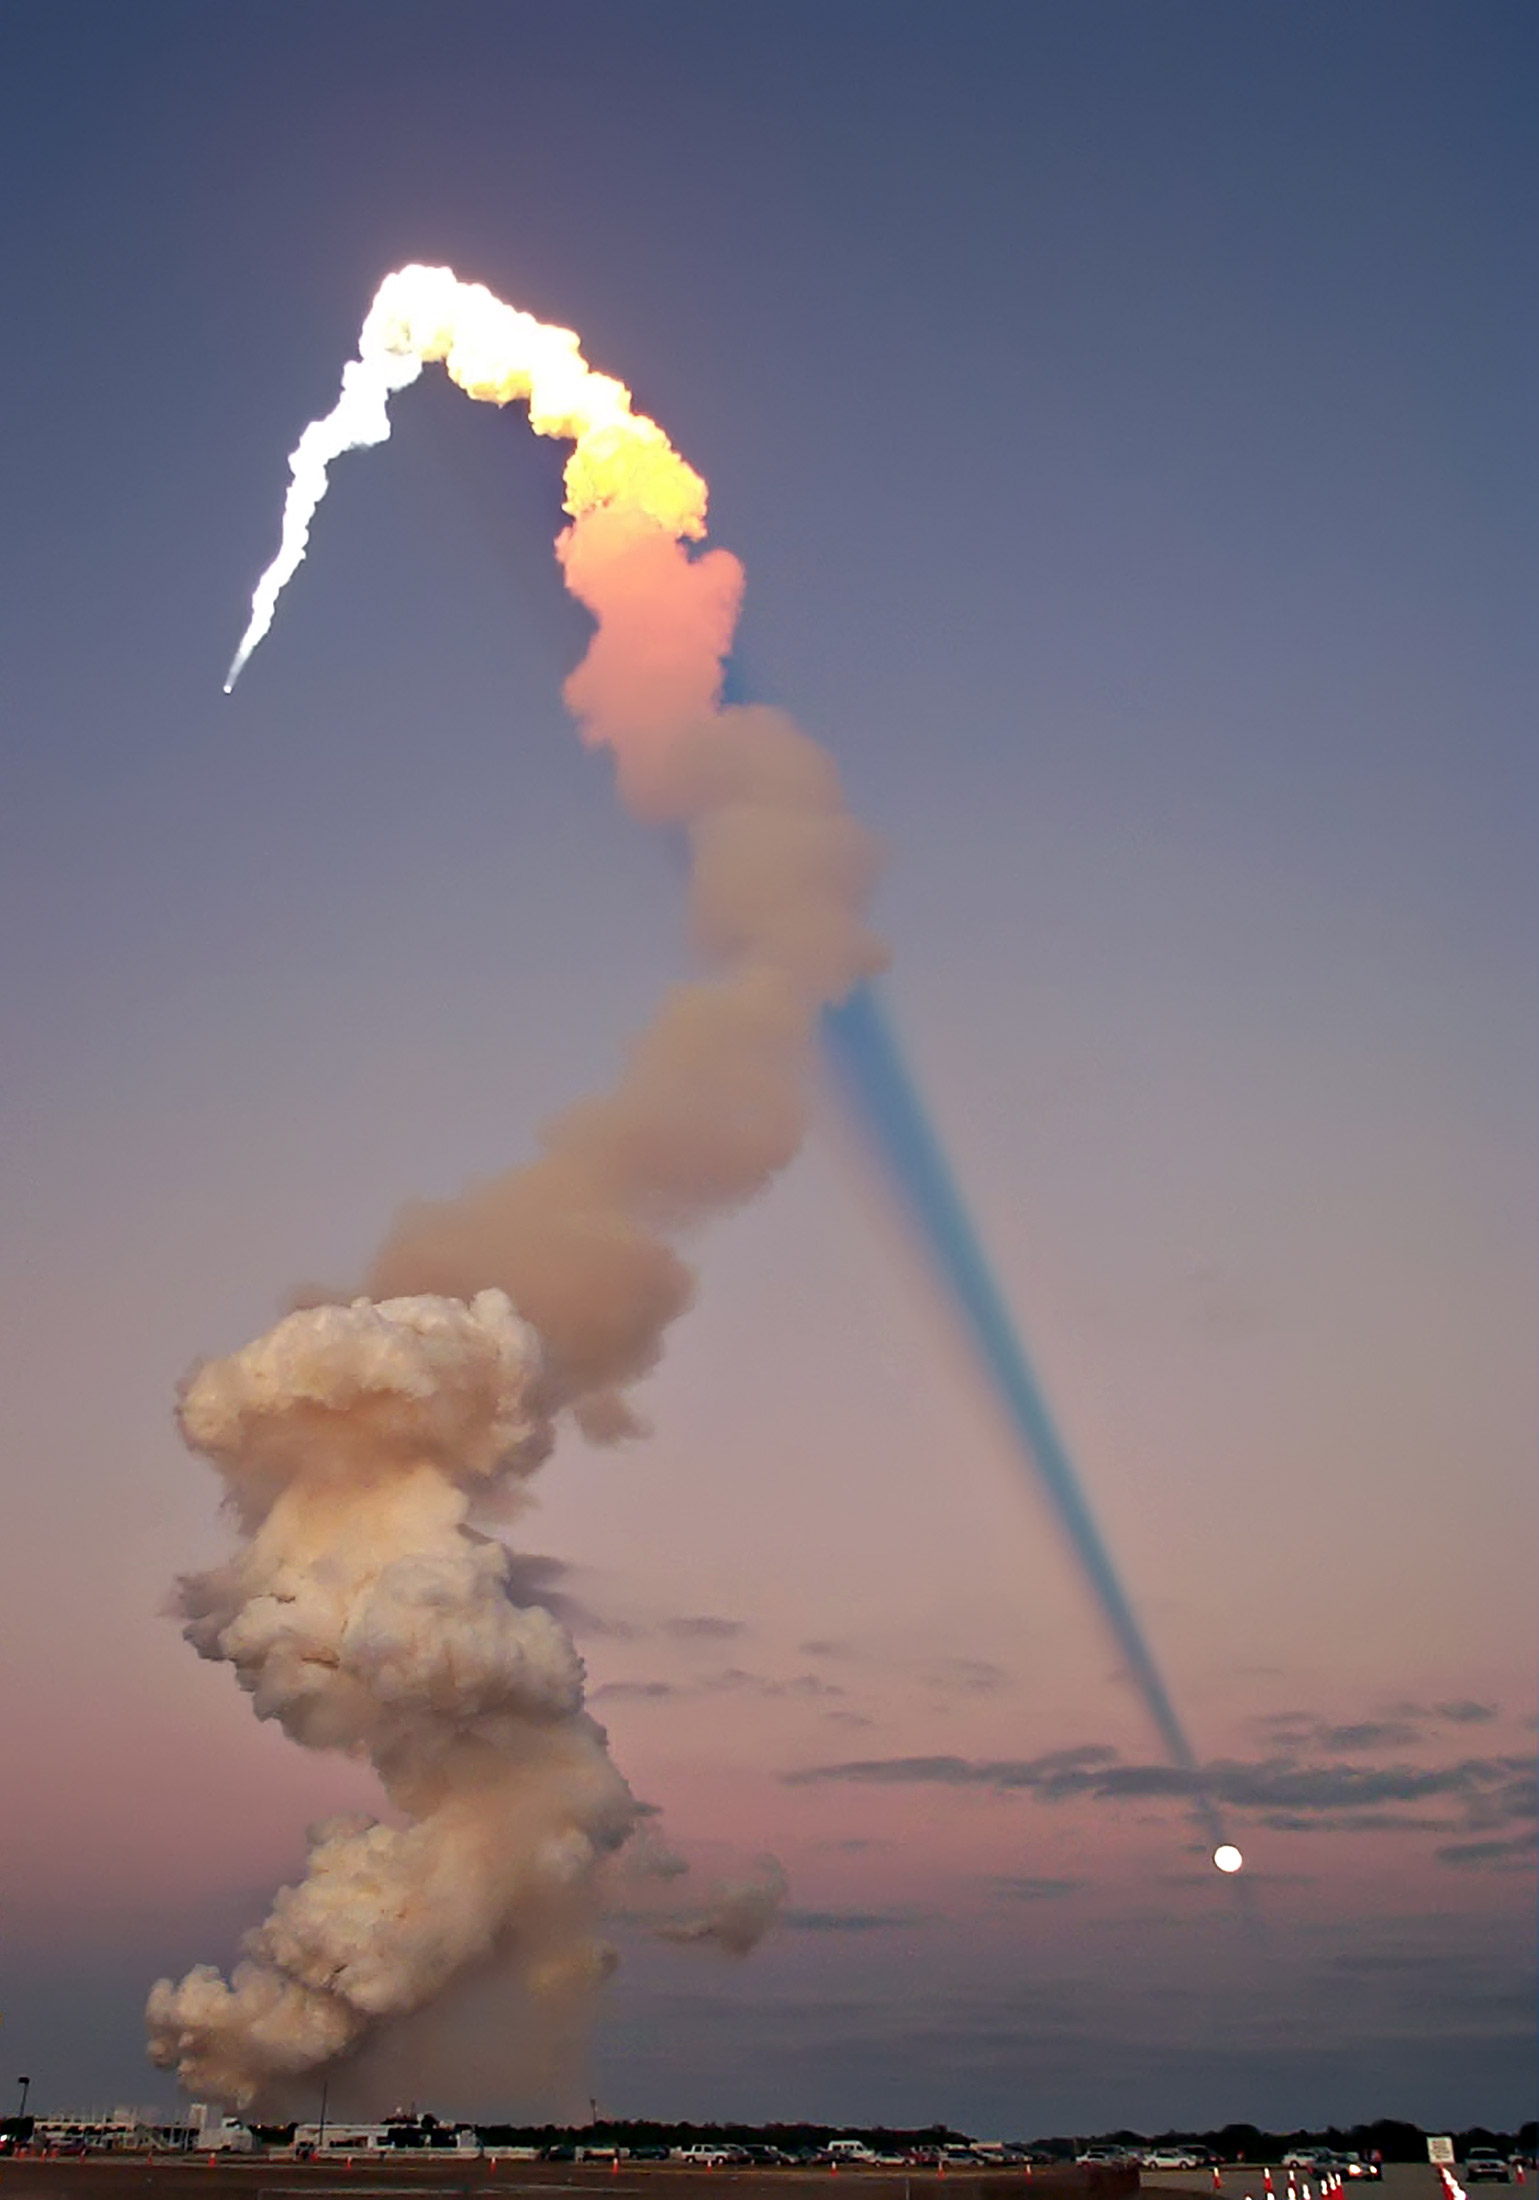 File:Atlantis launch plume edit.jpg - Wikipedia